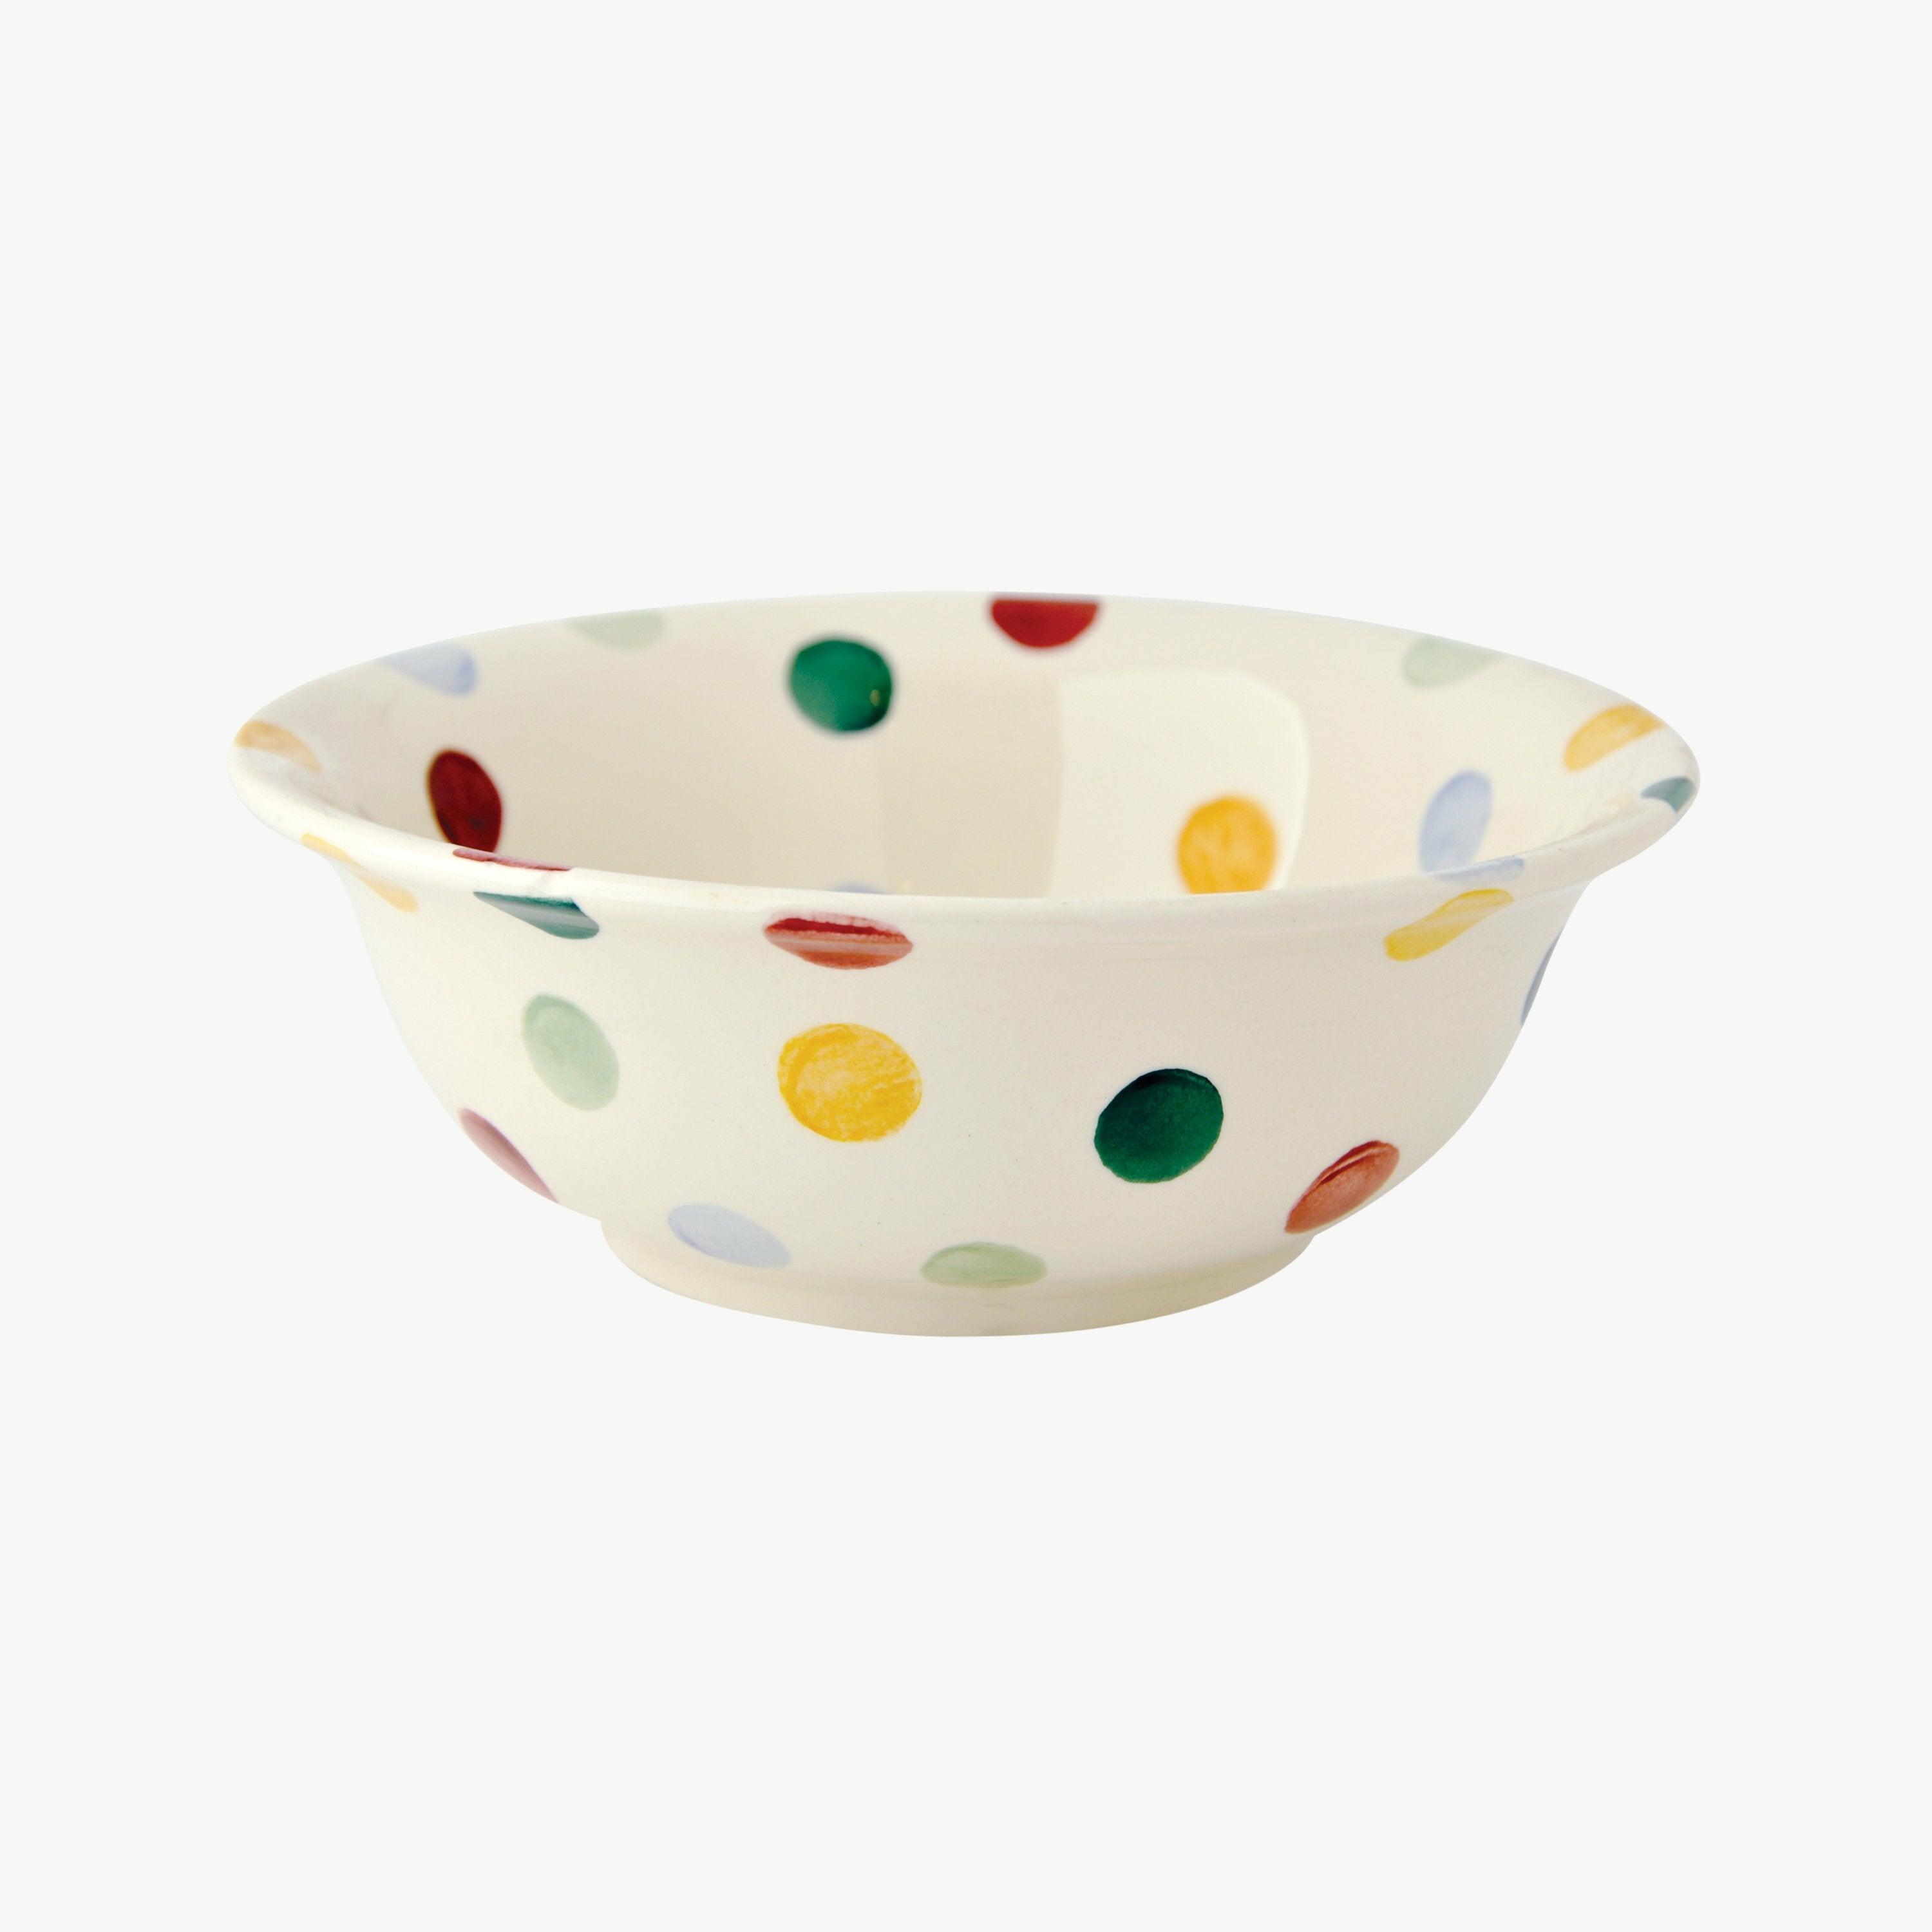 Emma Bridgewater  Seconds Polka Dot Cereal Bowl - Unique Handmade & Handpainted English Earthenware Decorative Plates